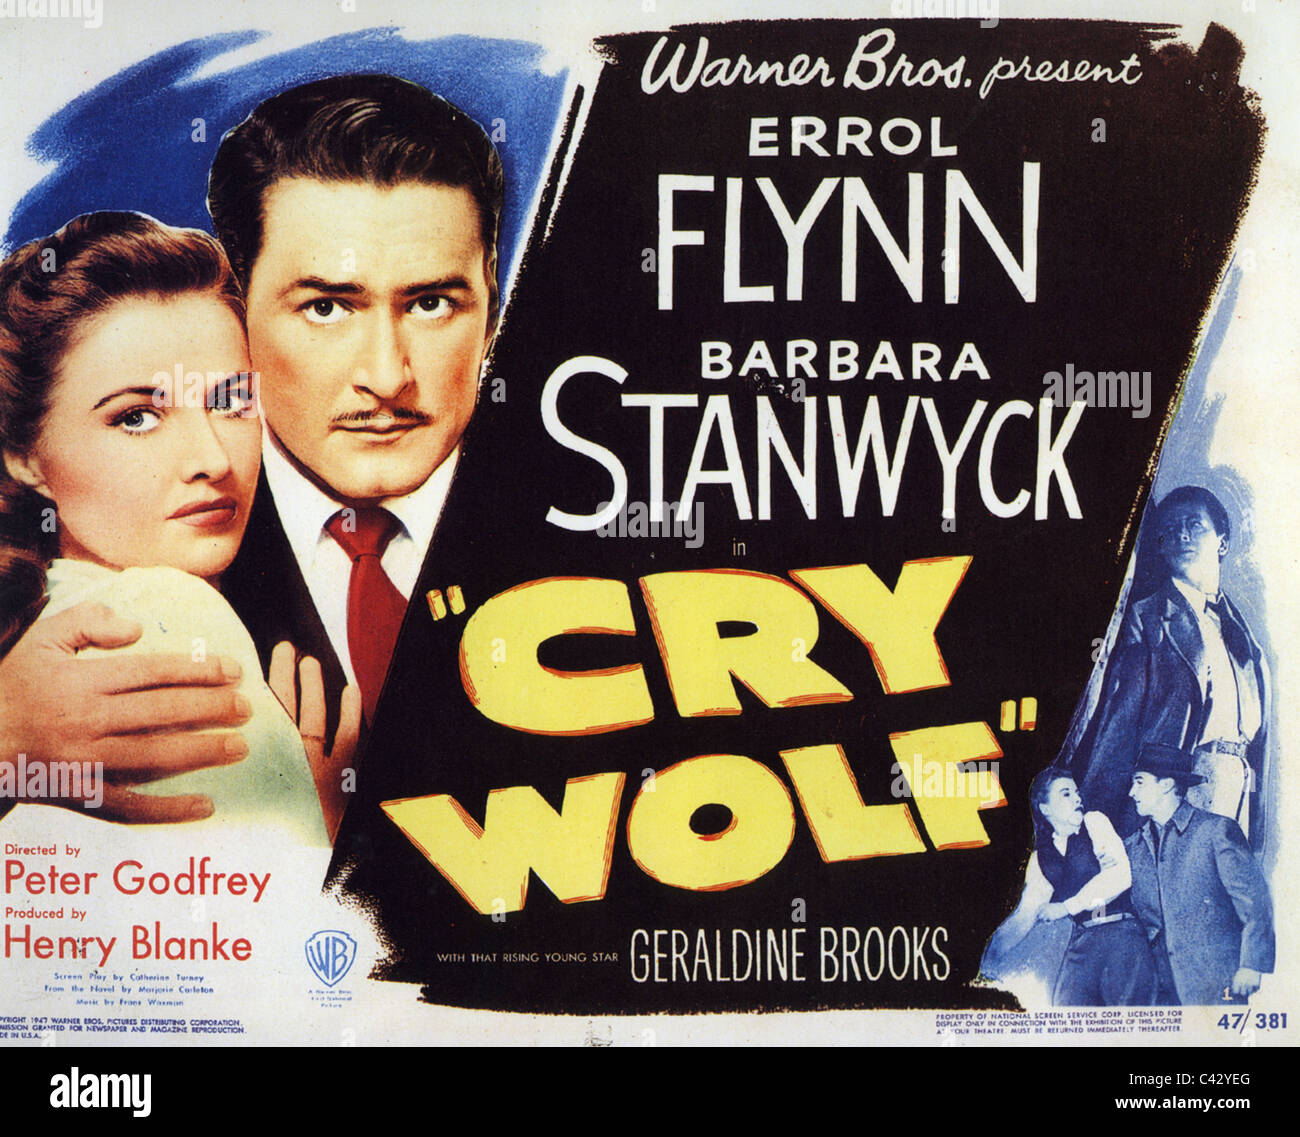 CRY WOLF Poster pour Warner Bros 1947 film avec Errol Flynn et Barbara Stanwyck Banque D'Images